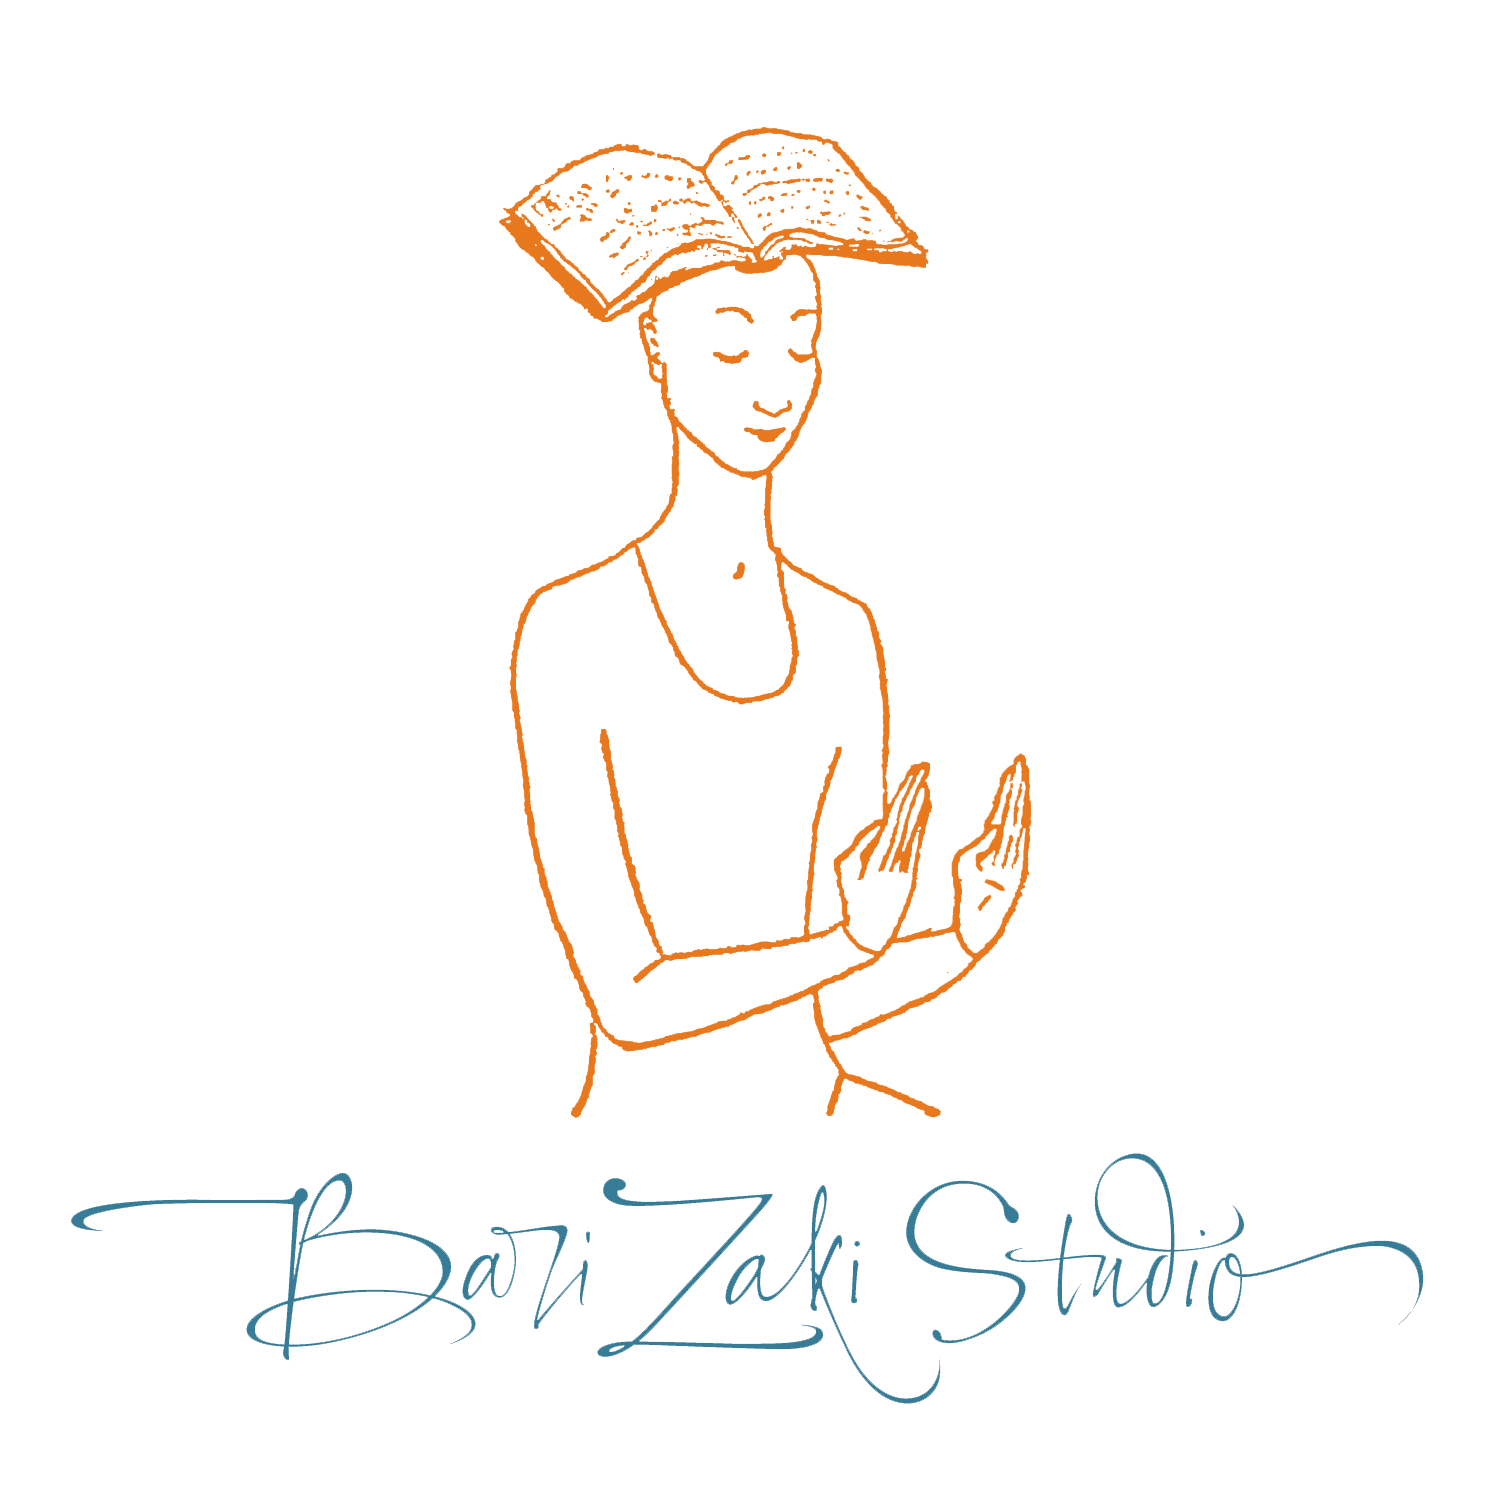 Bookbinding Tool Kit  Coptic or Japanese style — Bari Zaki Studio